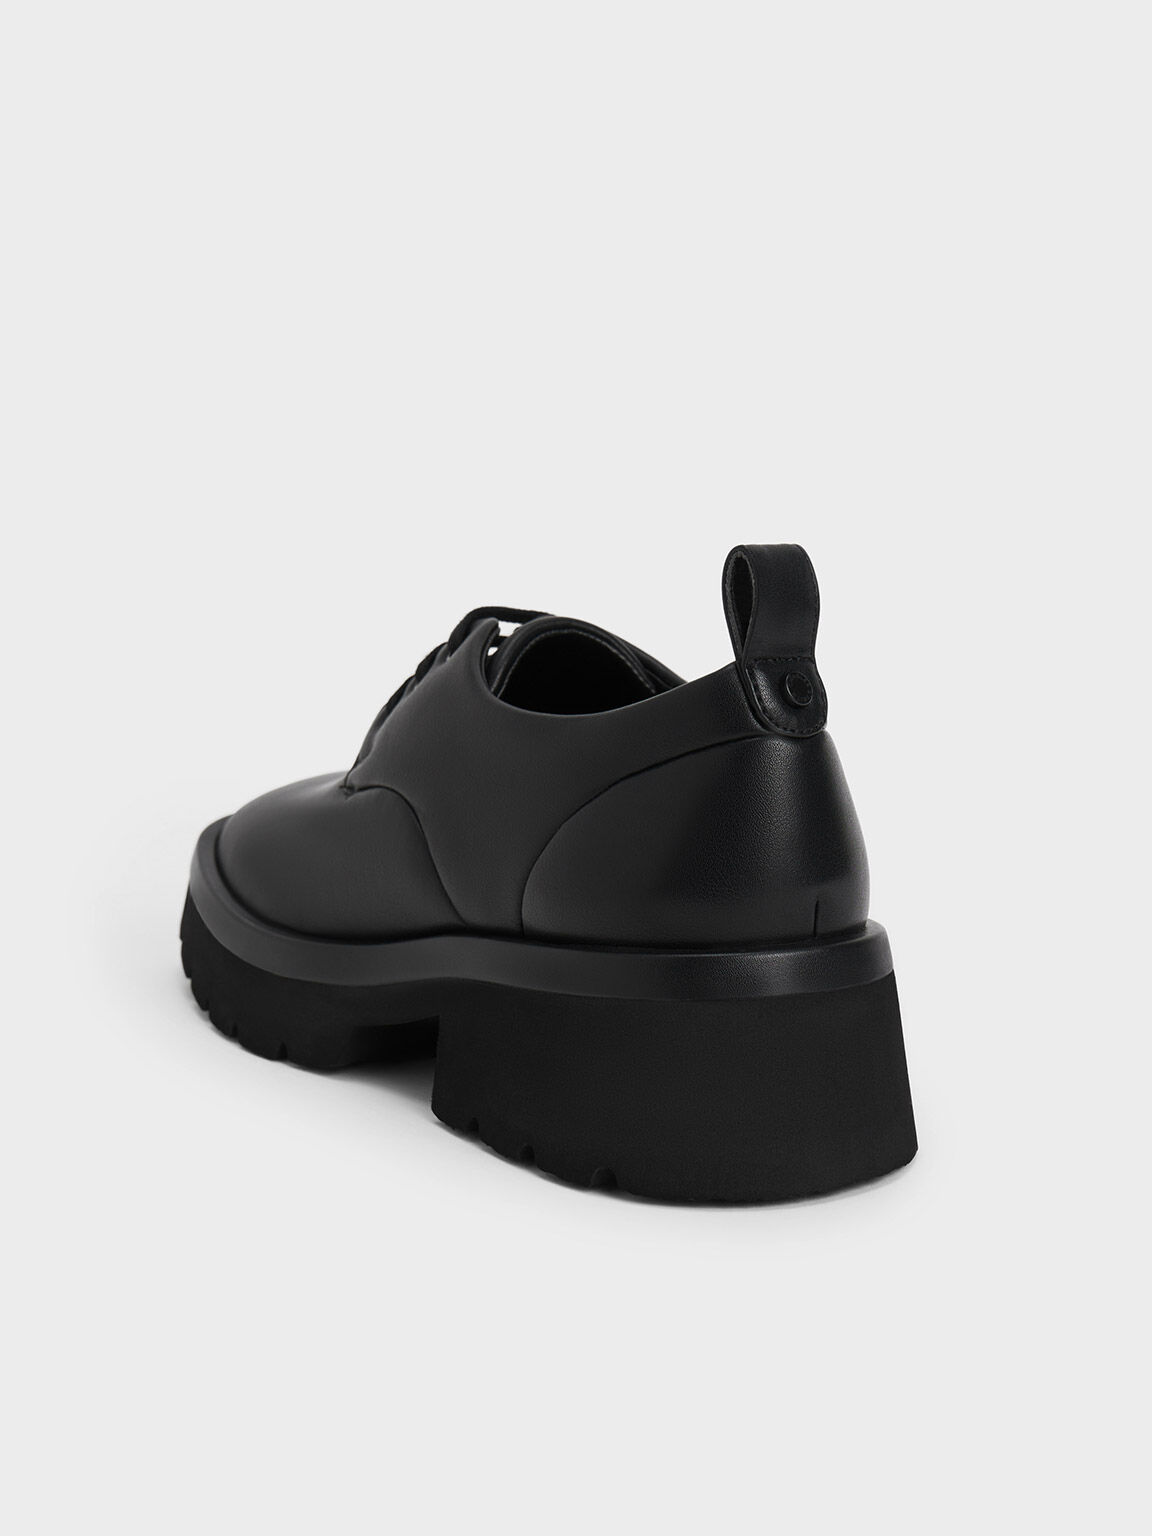 Sepatu Oxfords Ridged Sole Lace-Up, Black, hi-res